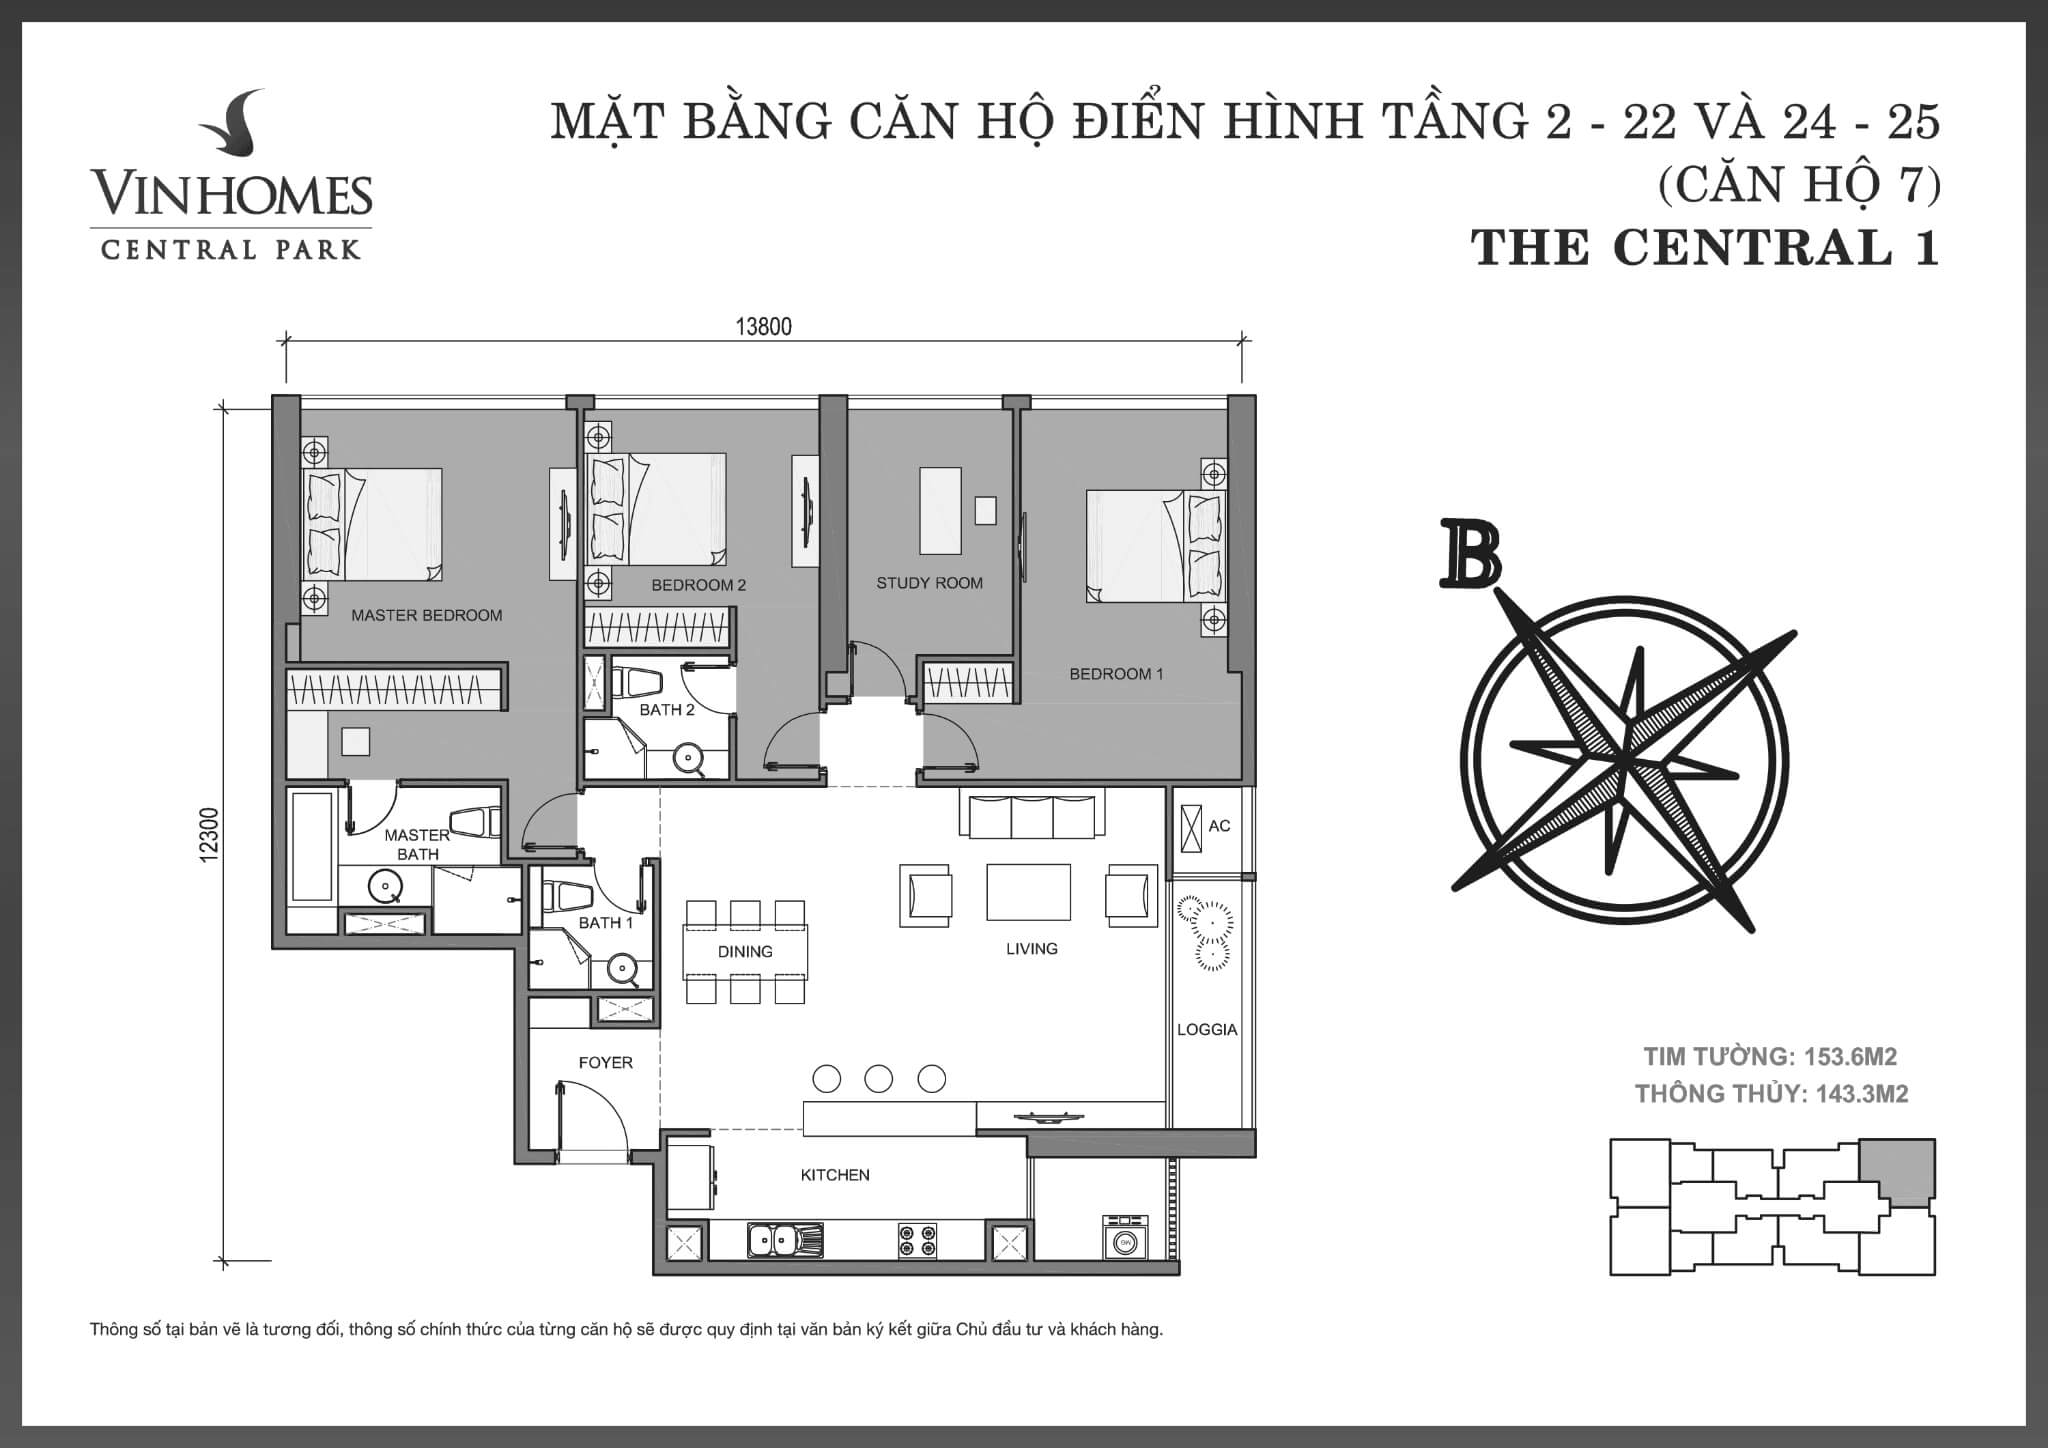 Layout căn hộ số 07 tầng 2-25 tòa The Central 1 - Mặt bằng Vinhomes Central Park